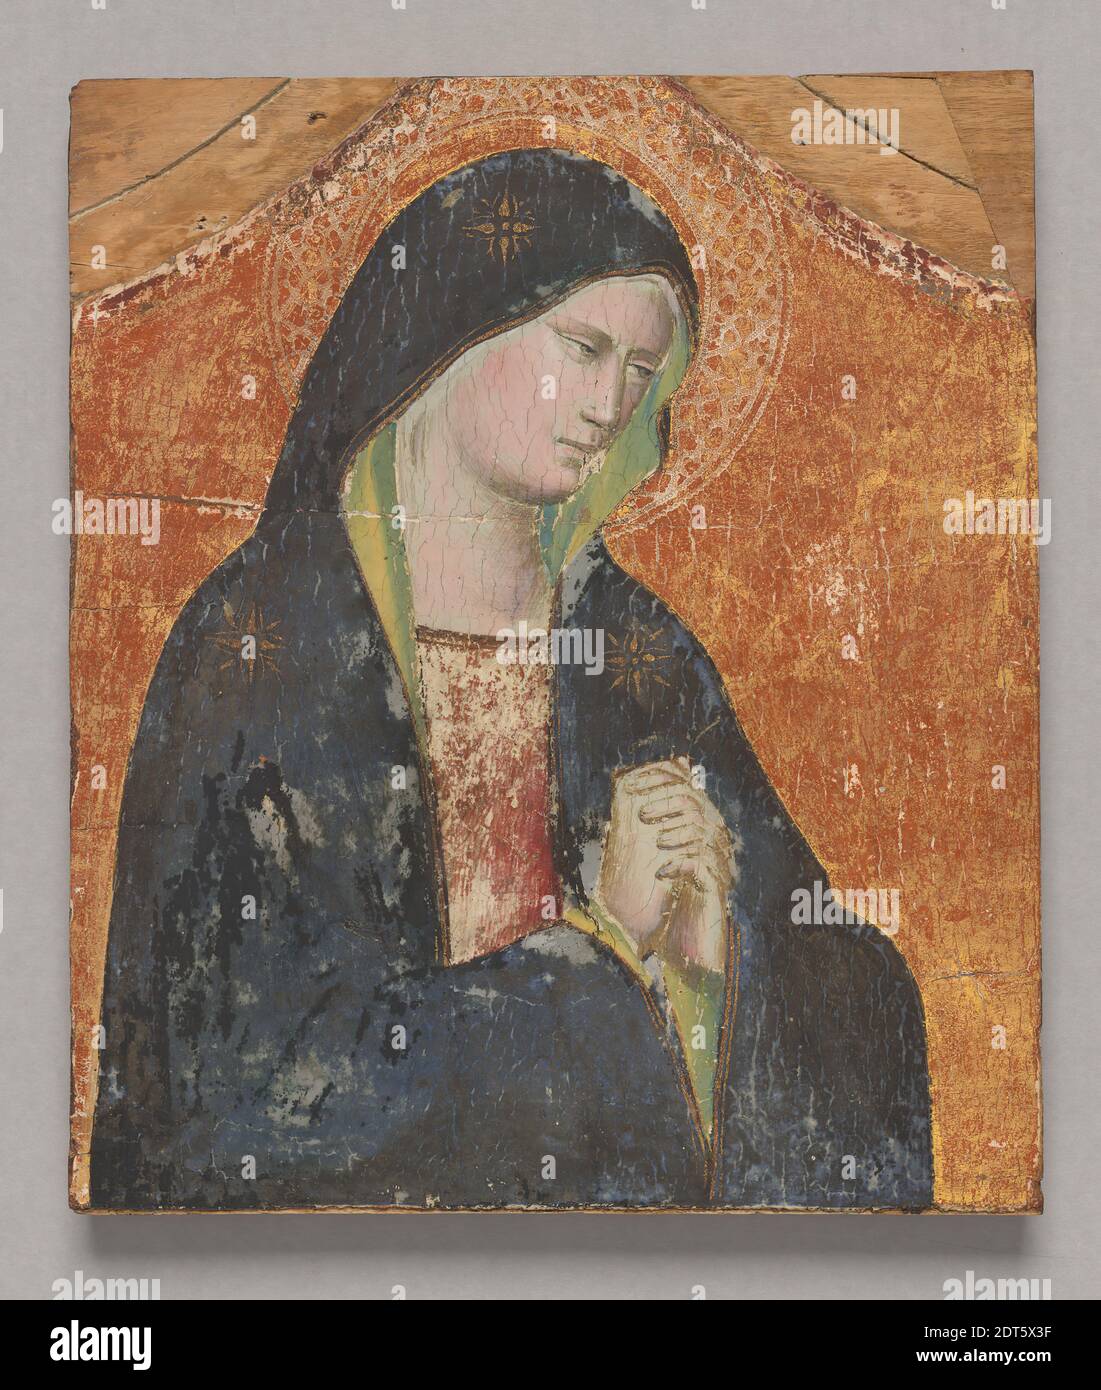 Artist: Pietro Nelli, Italian, active ca. 1375, died 1419, Mourning Virgin, ca. 1375, Egg tempera on panel, 37.66 × 12.88 cm (14 13/16 × 5 1/16 in.), Italian, 14th century, Paintings Stock Photo